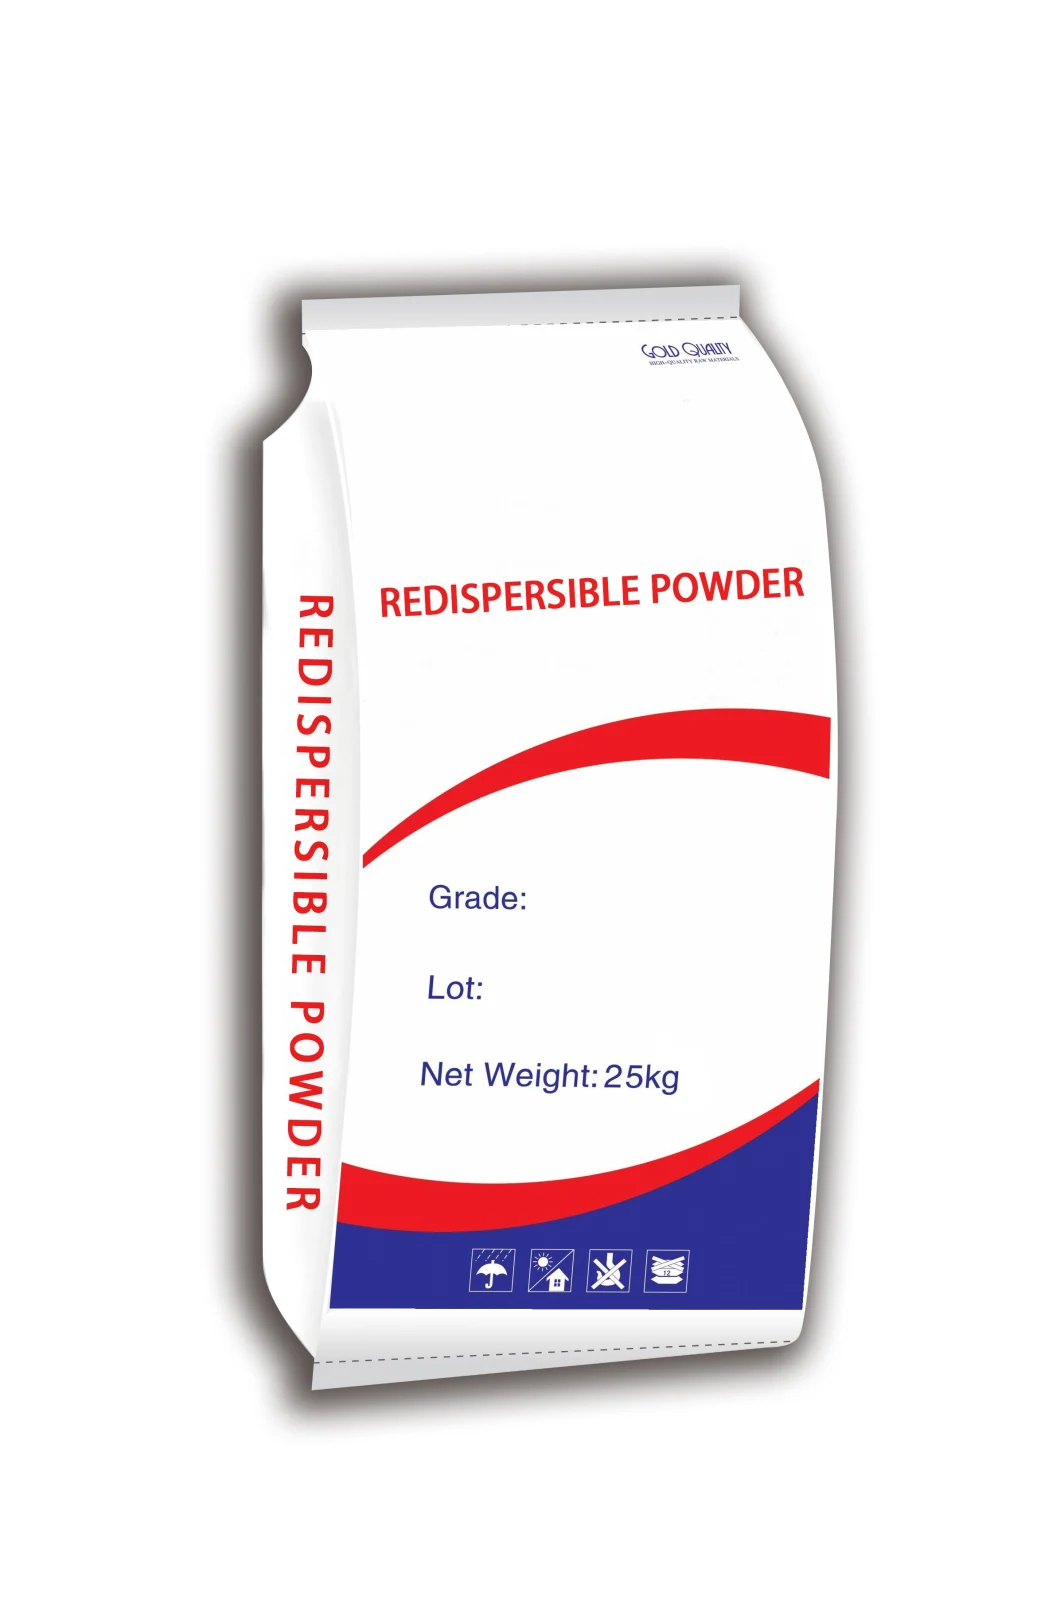 Good Dispersion Redispersible Latex Powder Vae Rdp on Sale on Stock